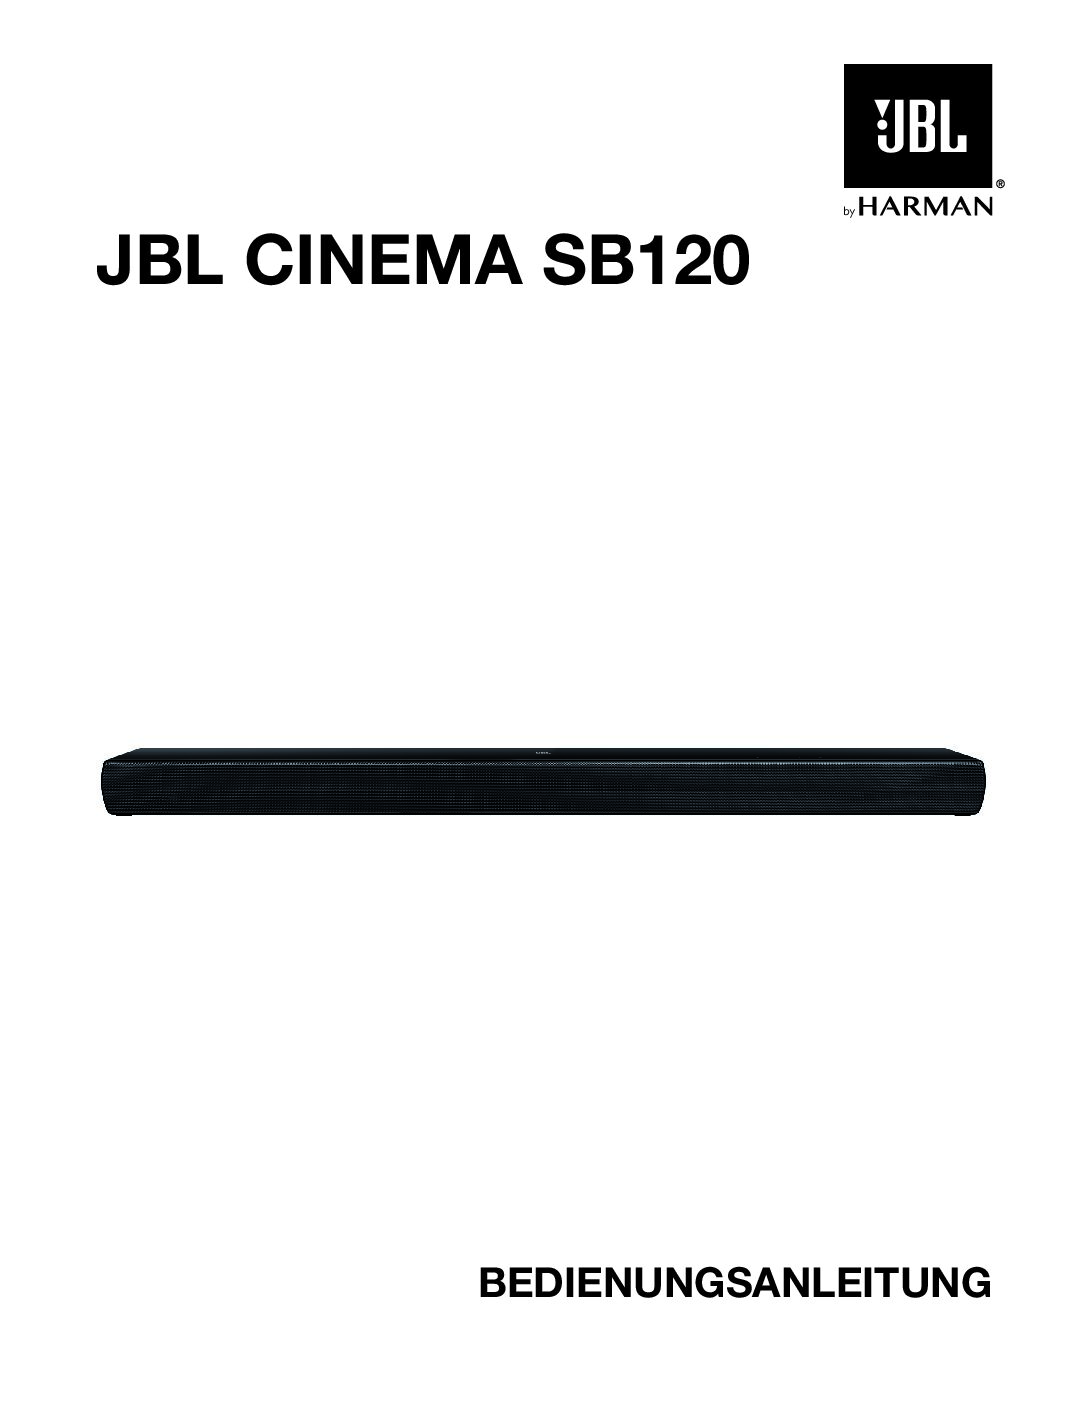 JBL Cinema SB120 Bedienungsanleitung